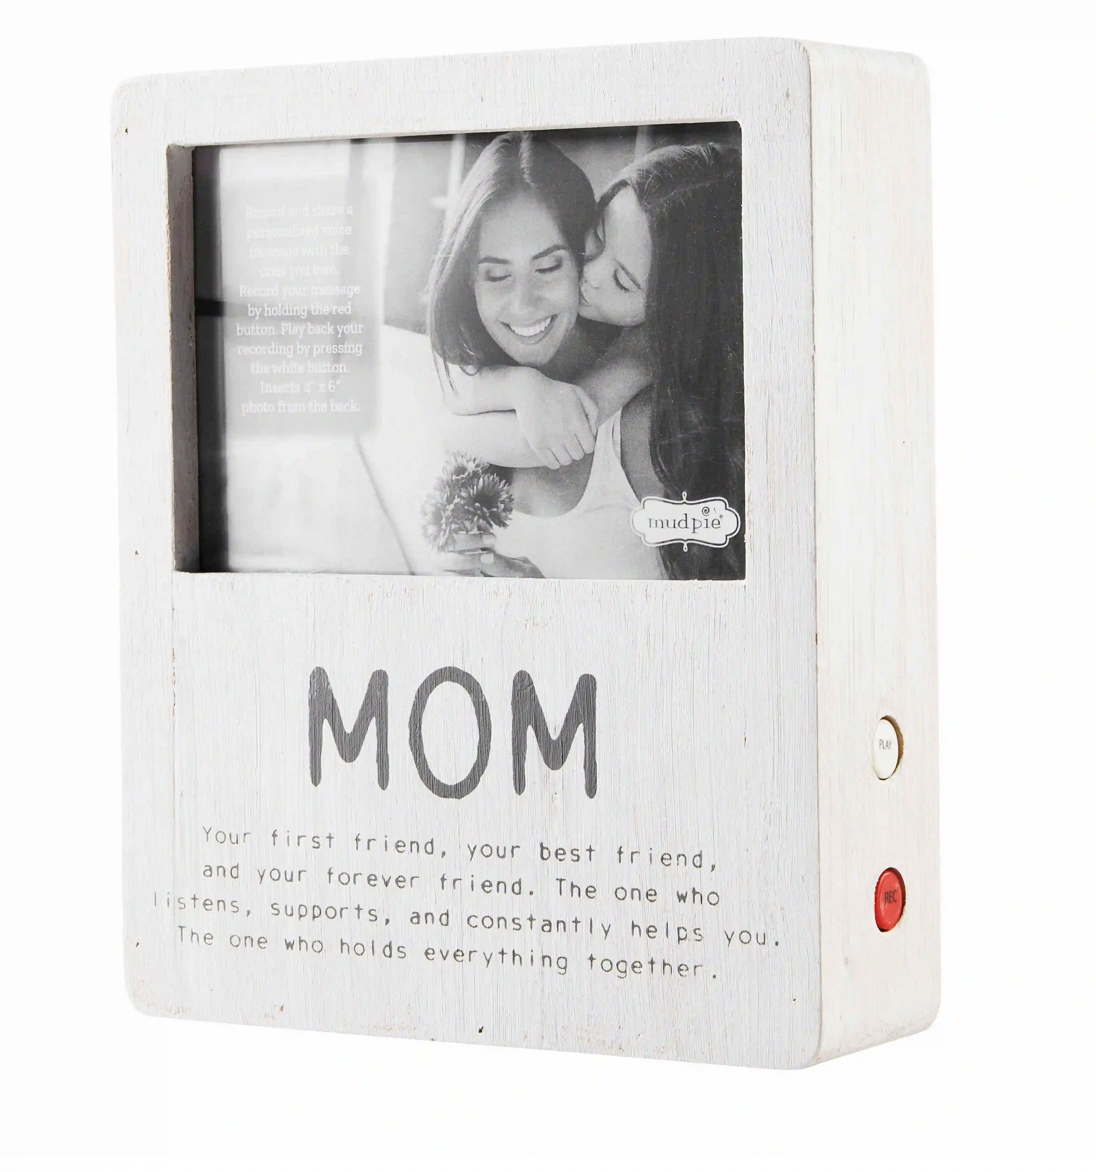 Mom Voice Recorder Frame